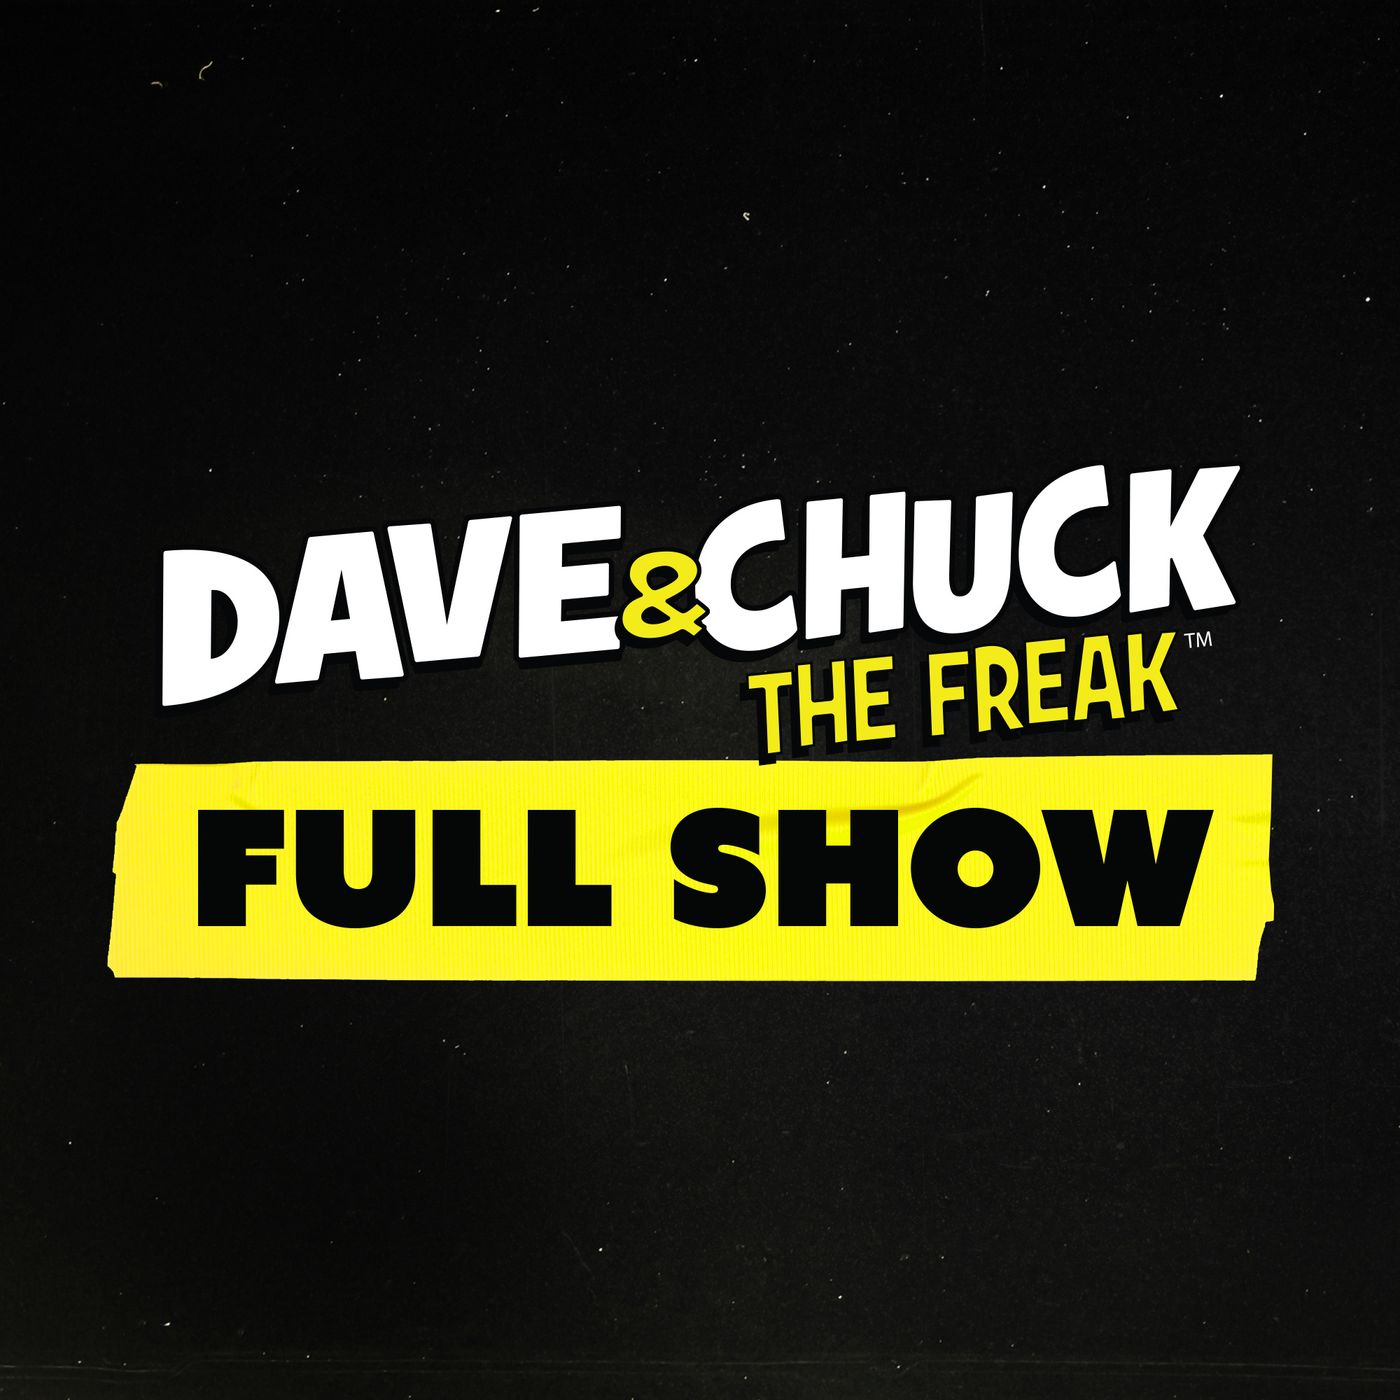 Tuesday, January 31st 2023 Dave & Chuck the Freak Full Show